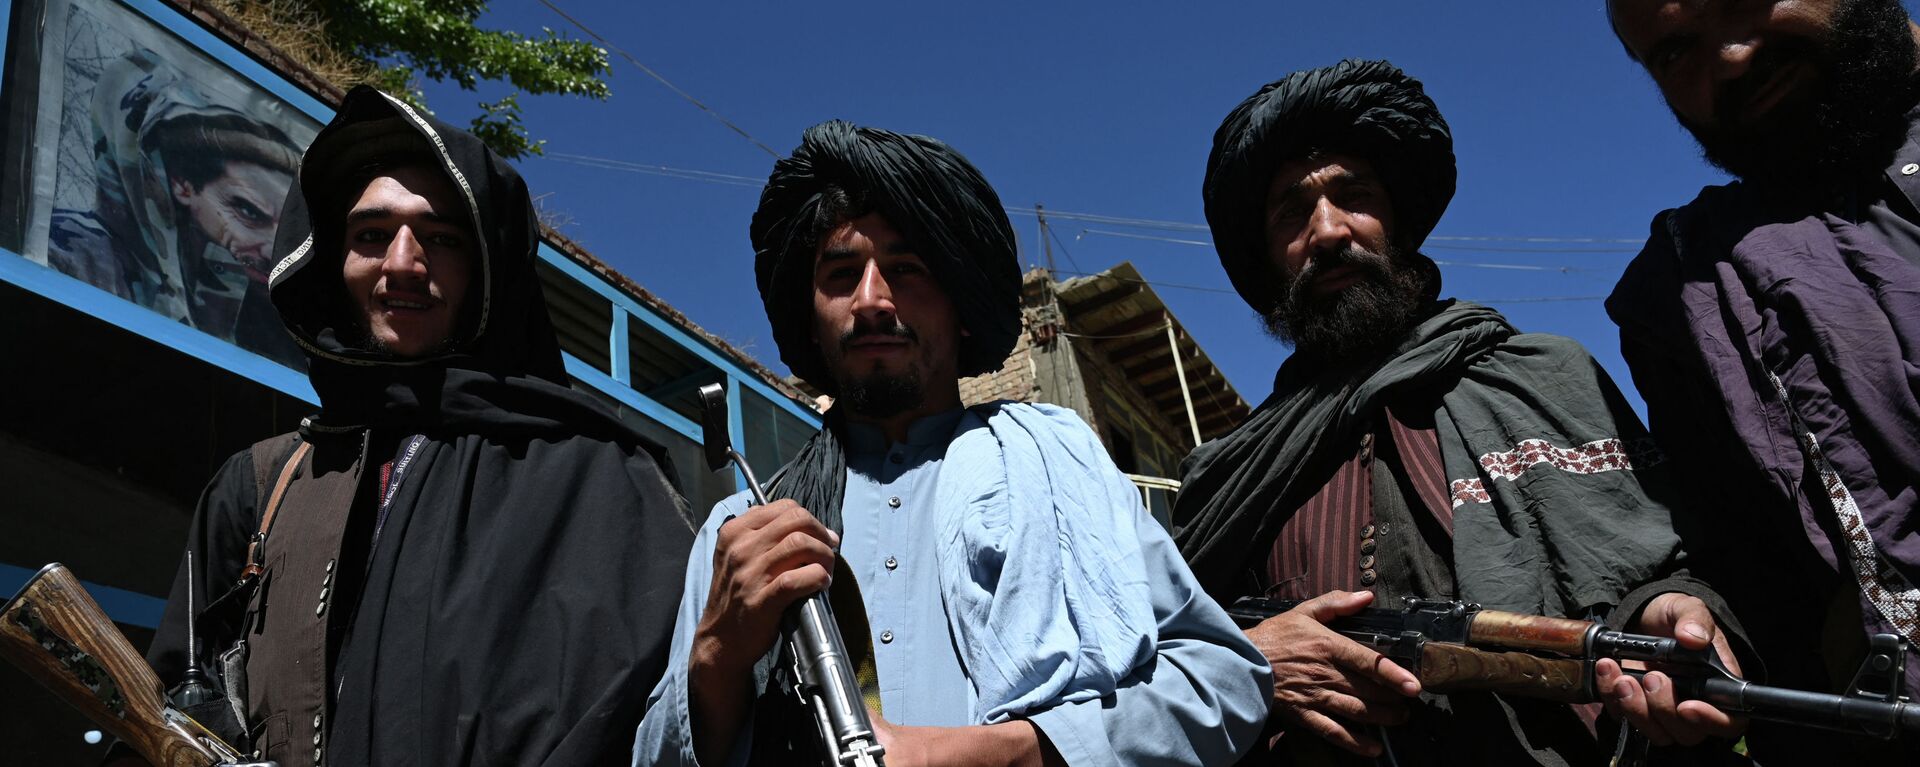 Боевики Талибана на рыночной площади в районе Хендж, провинция Панджшер (Афганистан). Архивное фото - Sputnik Кыргызстан, 1920, 21.07.2022